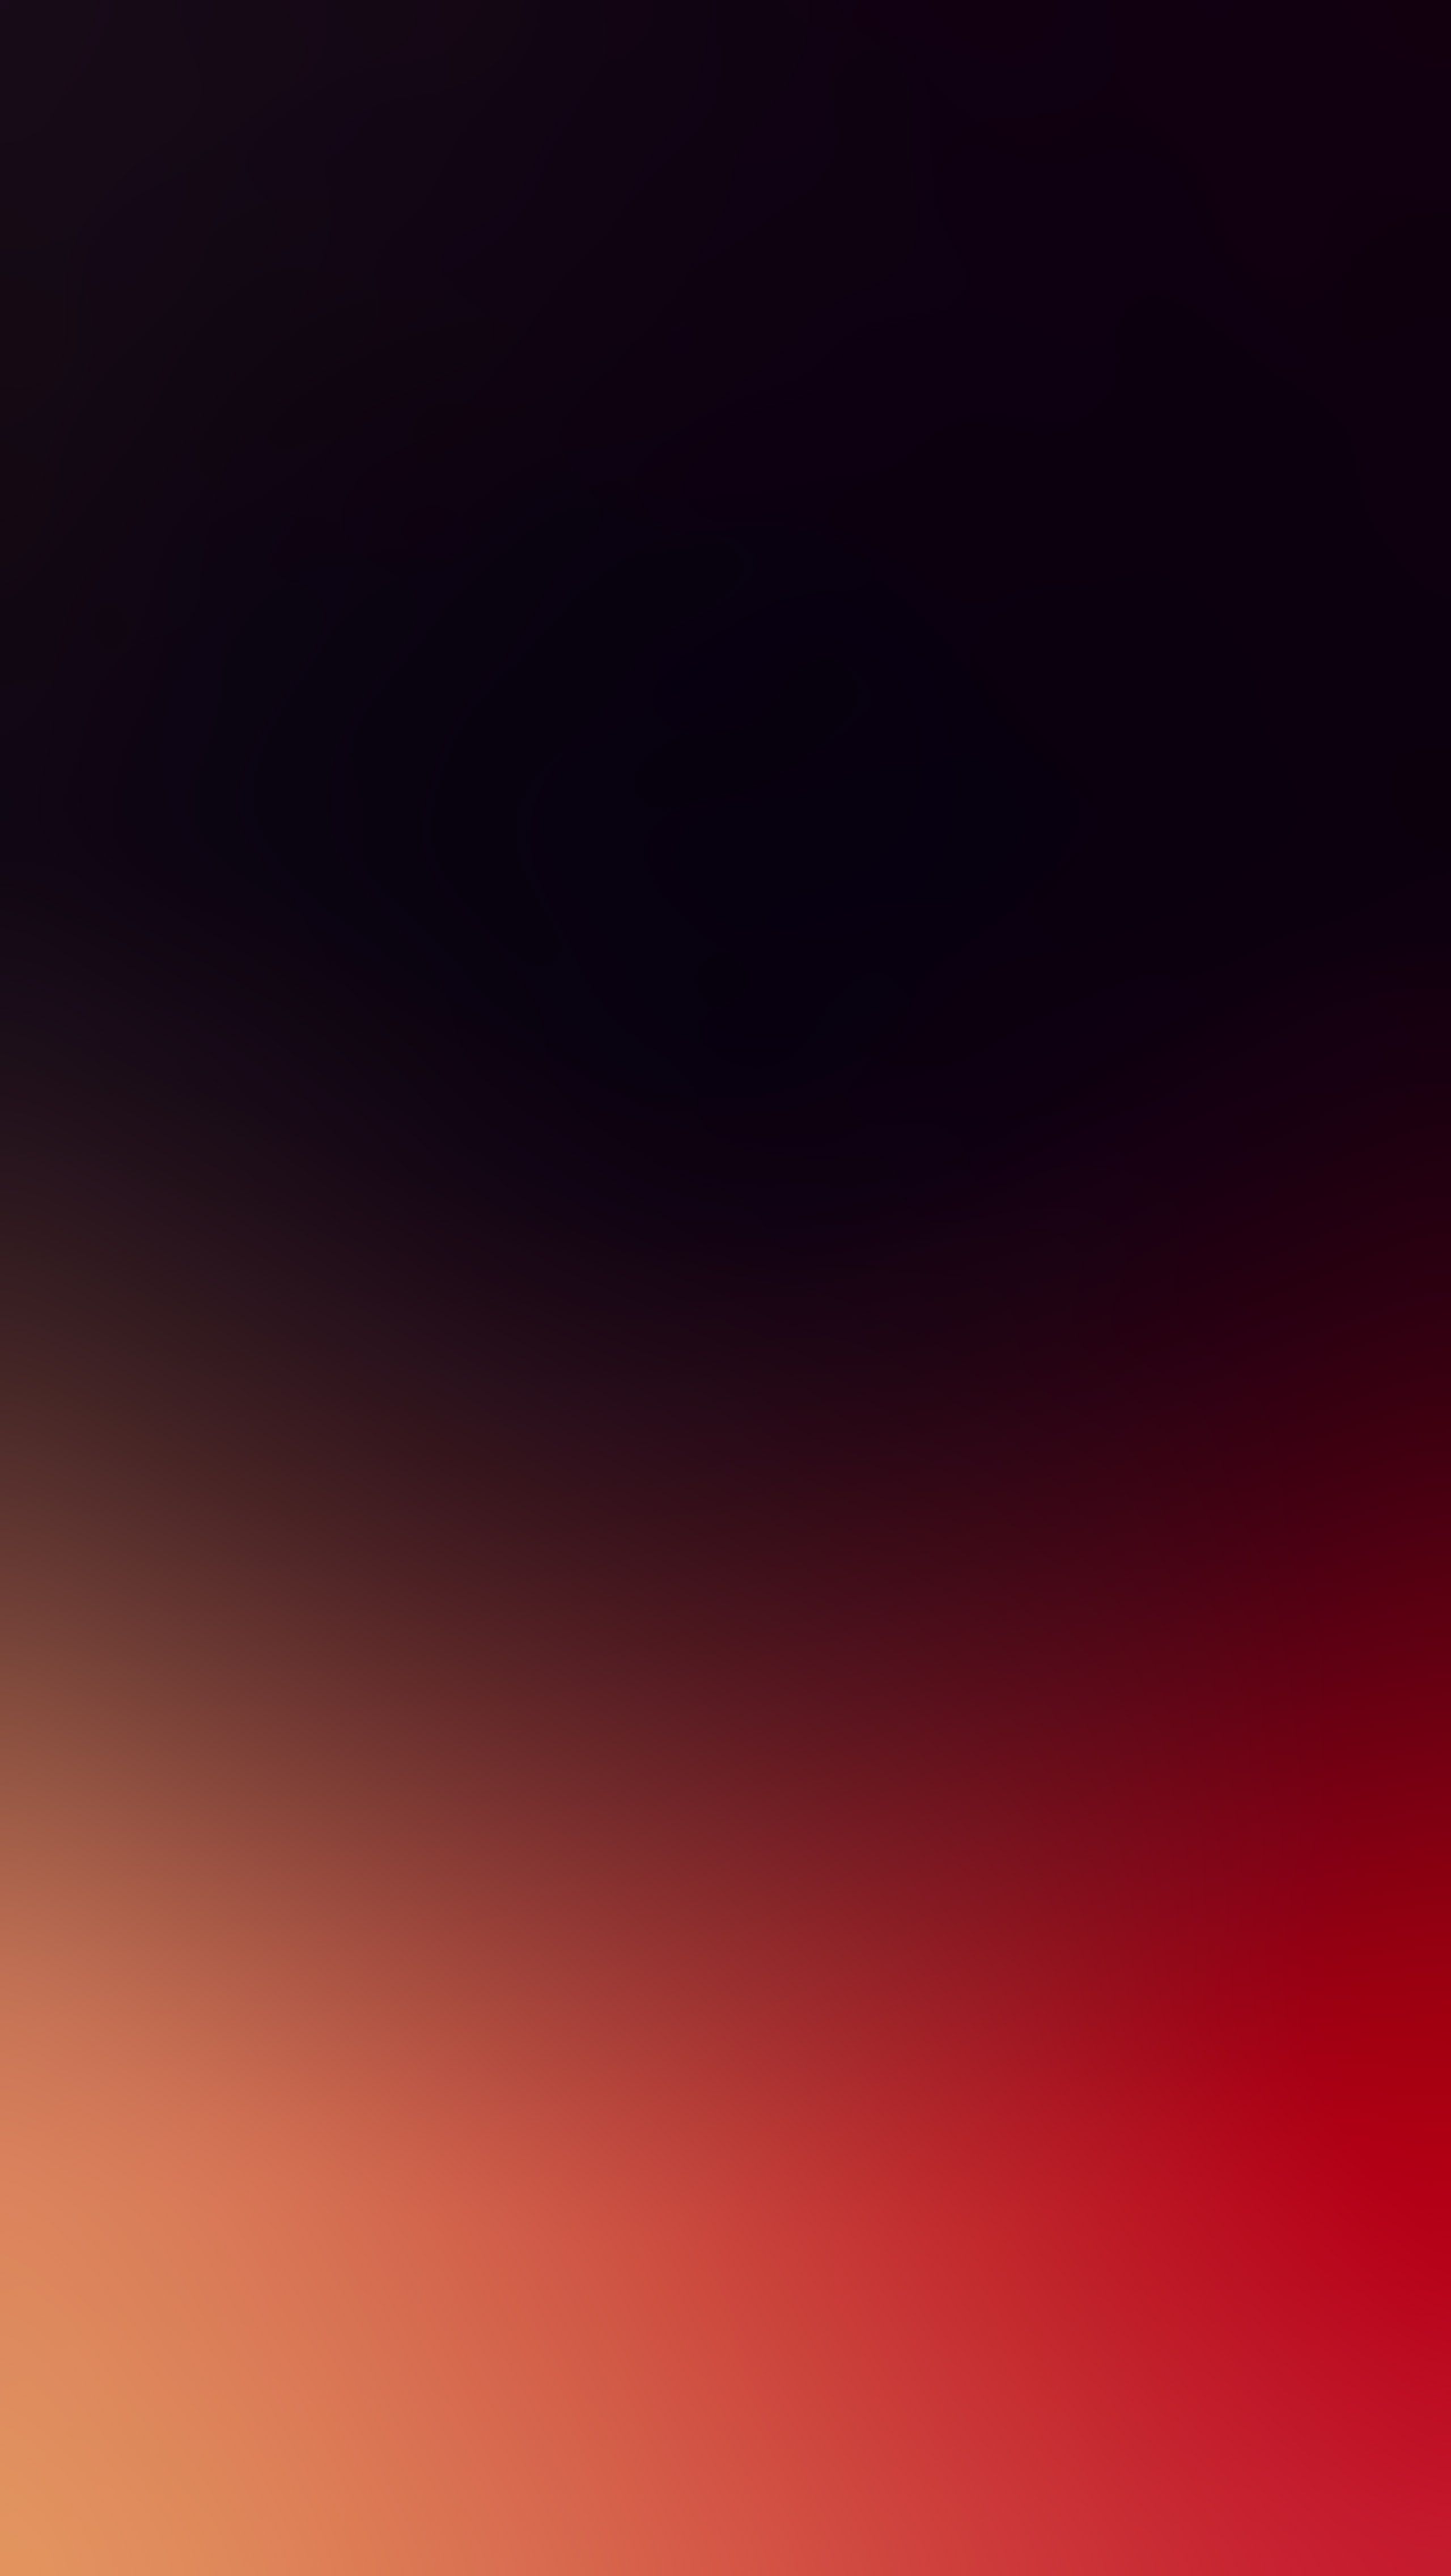 iOS 13 Wallpaper 4K Stock iPadOS Red Abstract 799